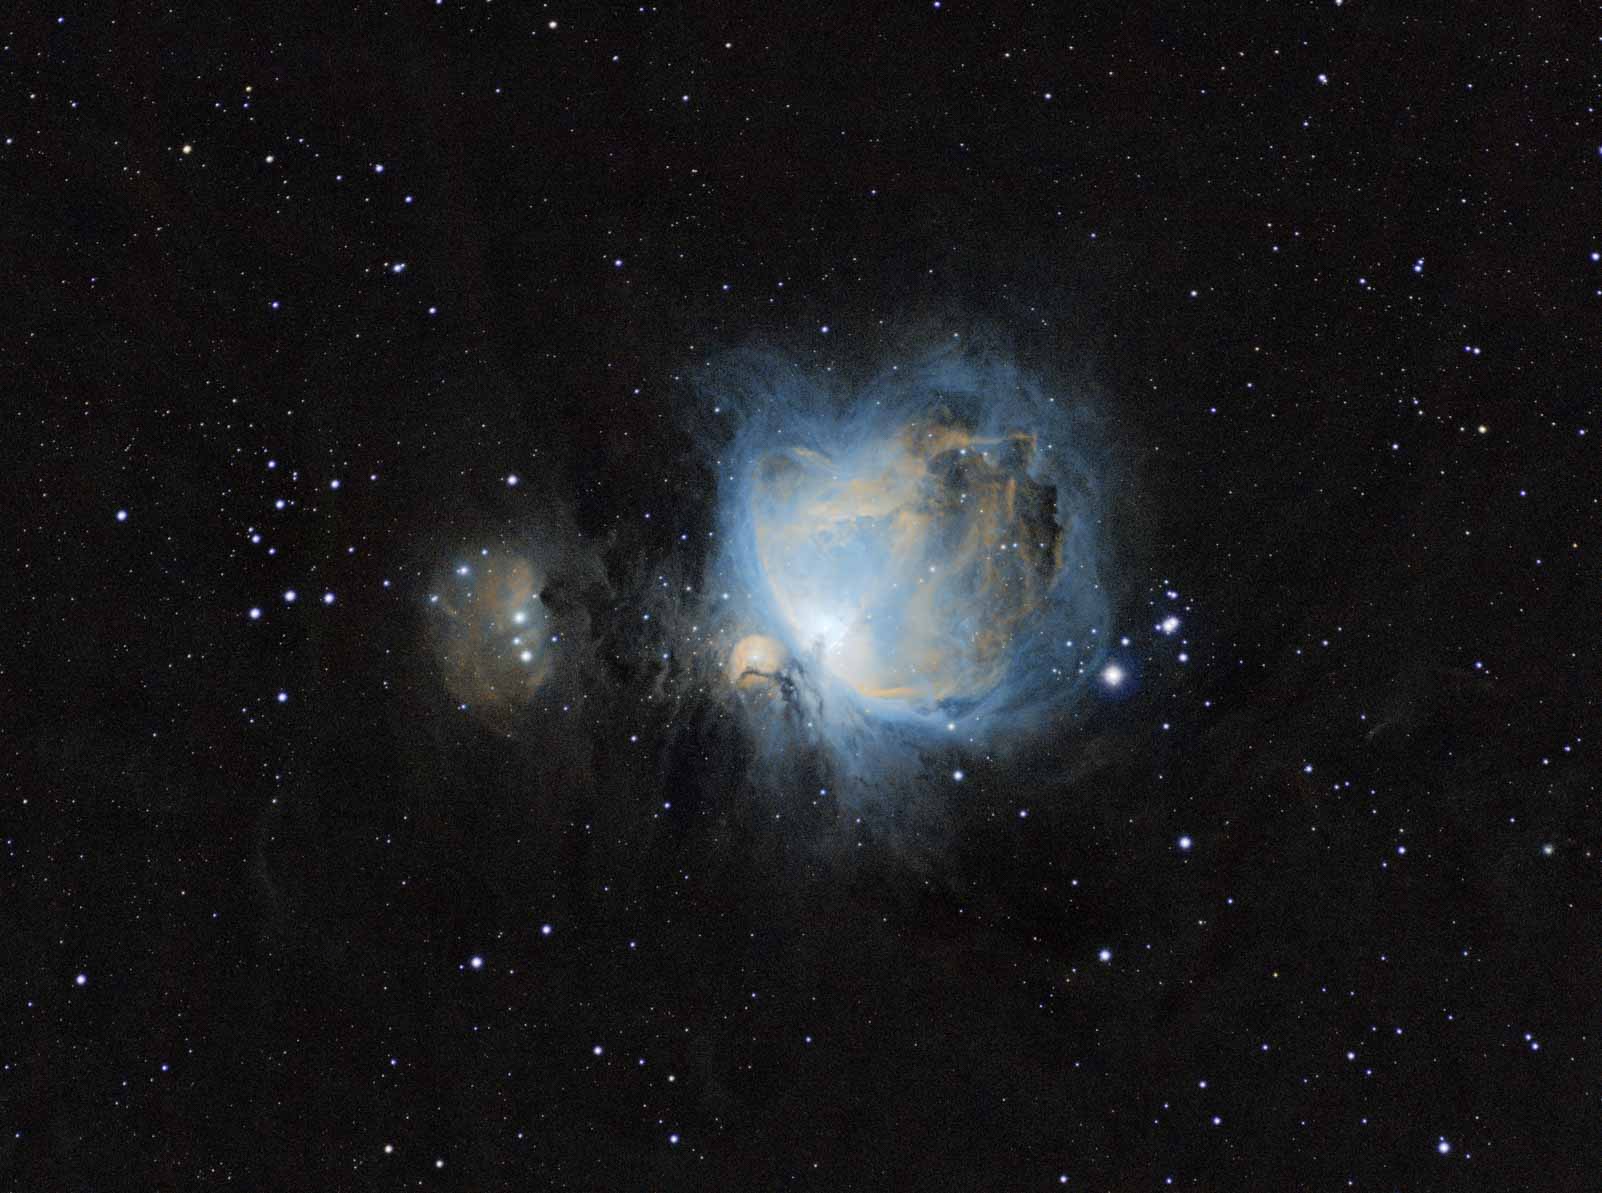 20200222-20200223 Messier 42, or Orion Nebula